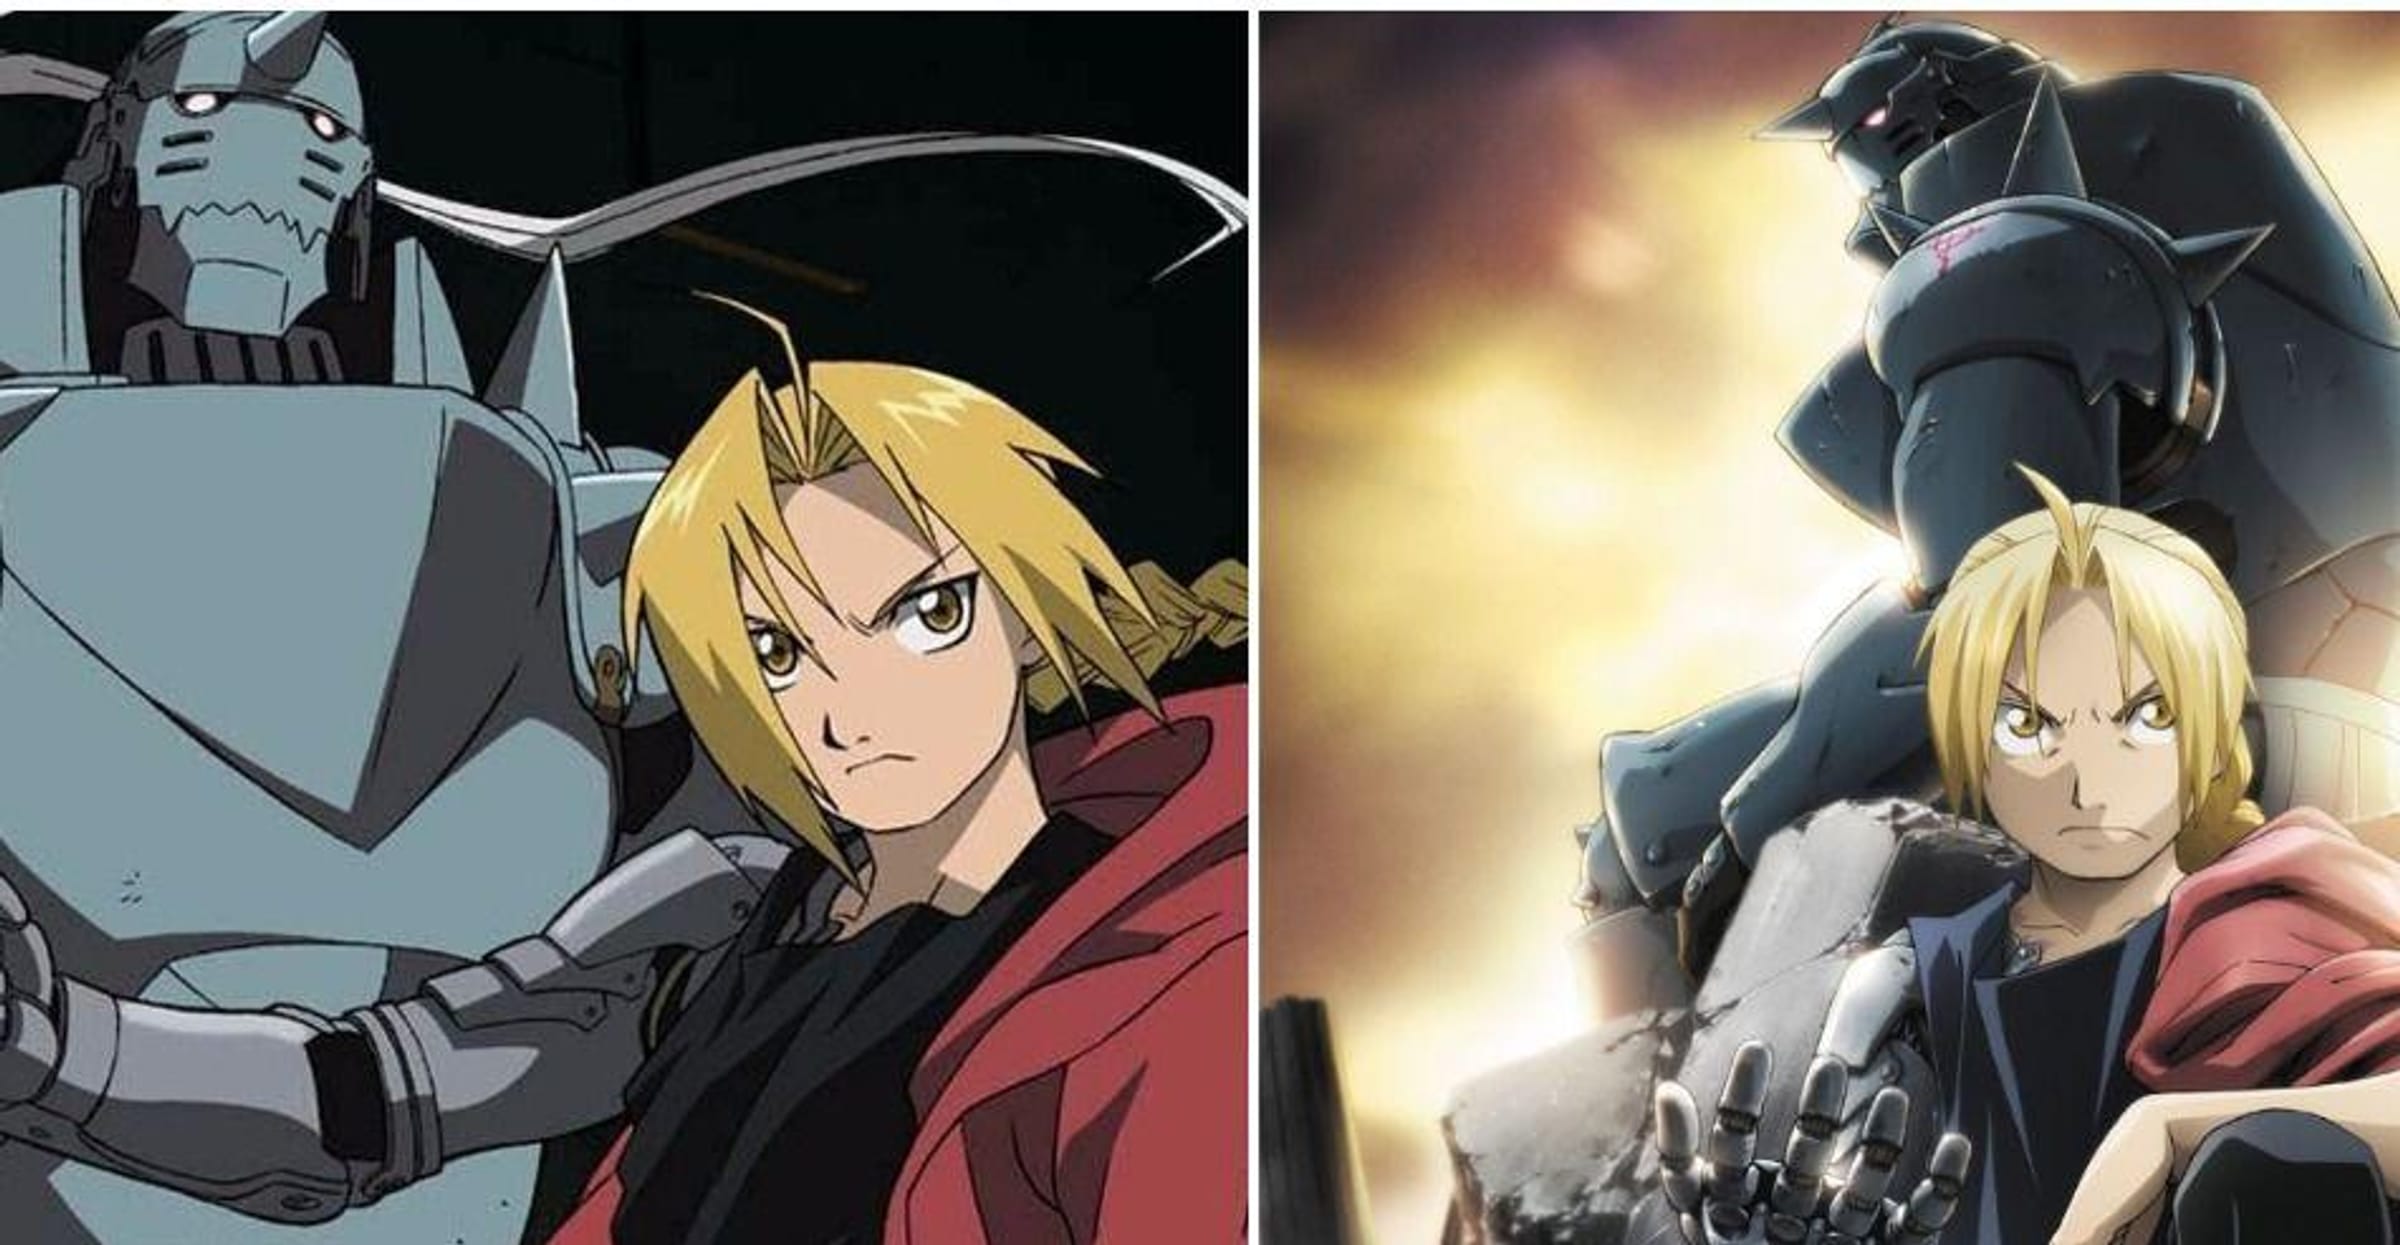 Is Fullmetal Alchemist's Original Anime Still Worth Watching?